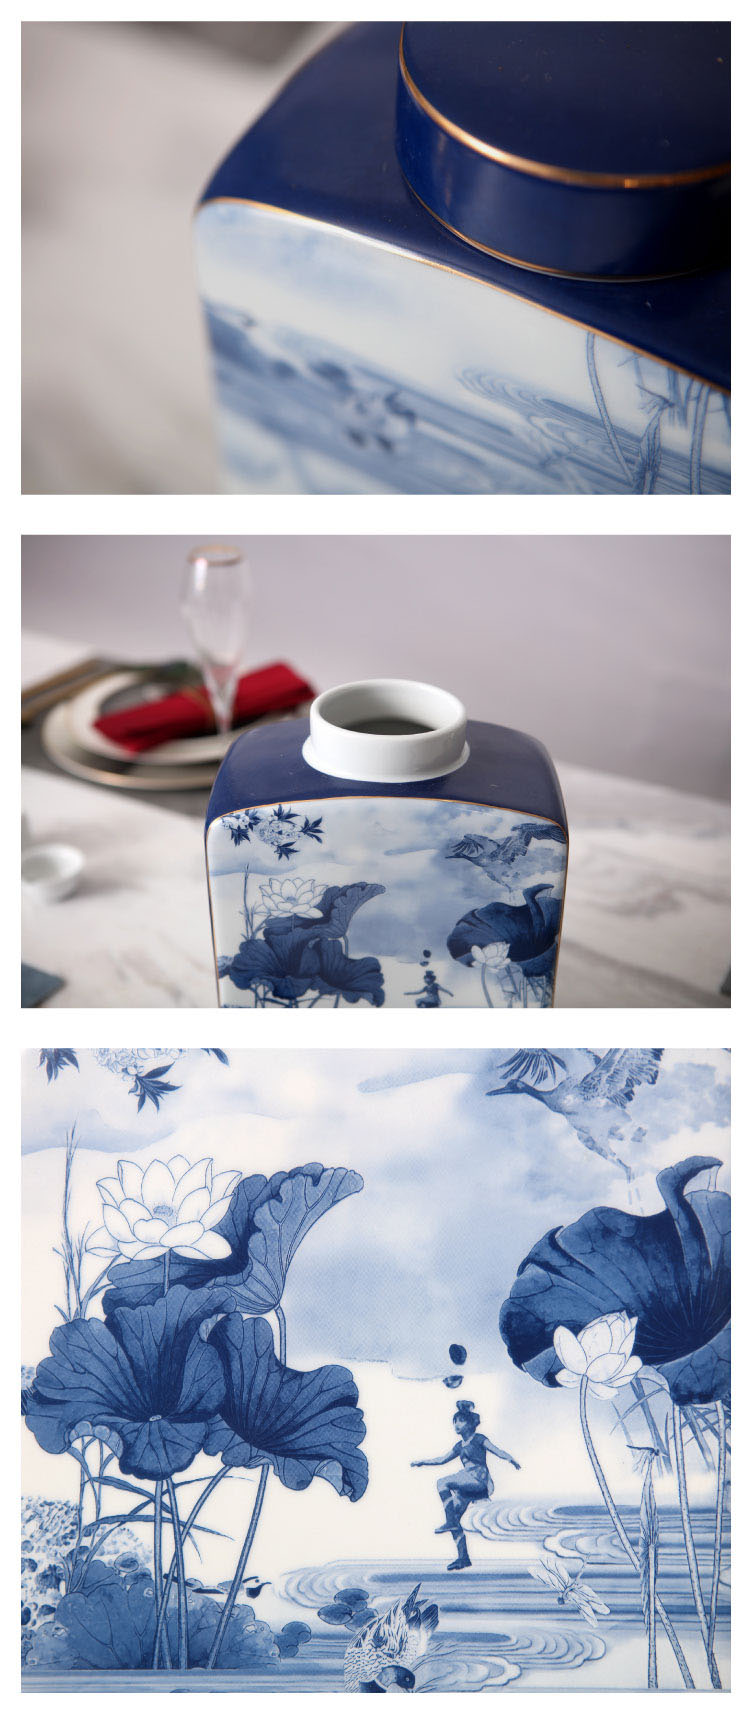 Blue And White Porcelain Vase Decor Jar Lotus Leaf Pattern Home Living Room Tabletop Decor Ornaments For New House Furnishings